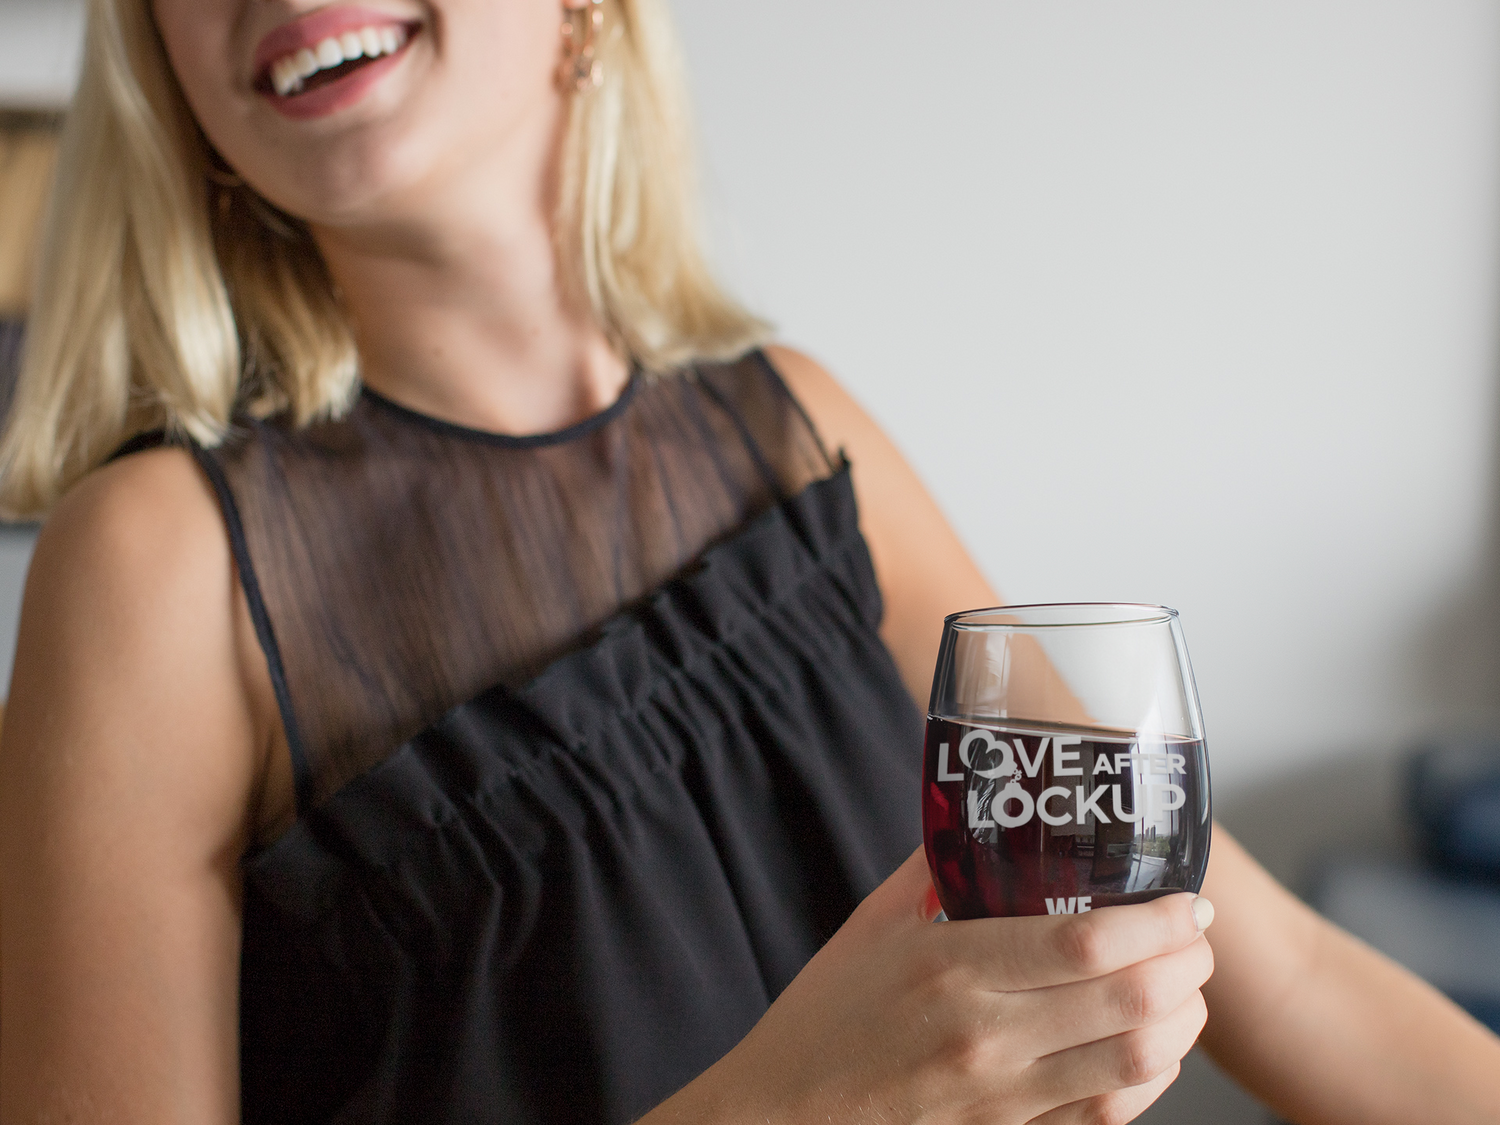 Love After Lockup Logo Laser Engraved Stemless Wine Glass